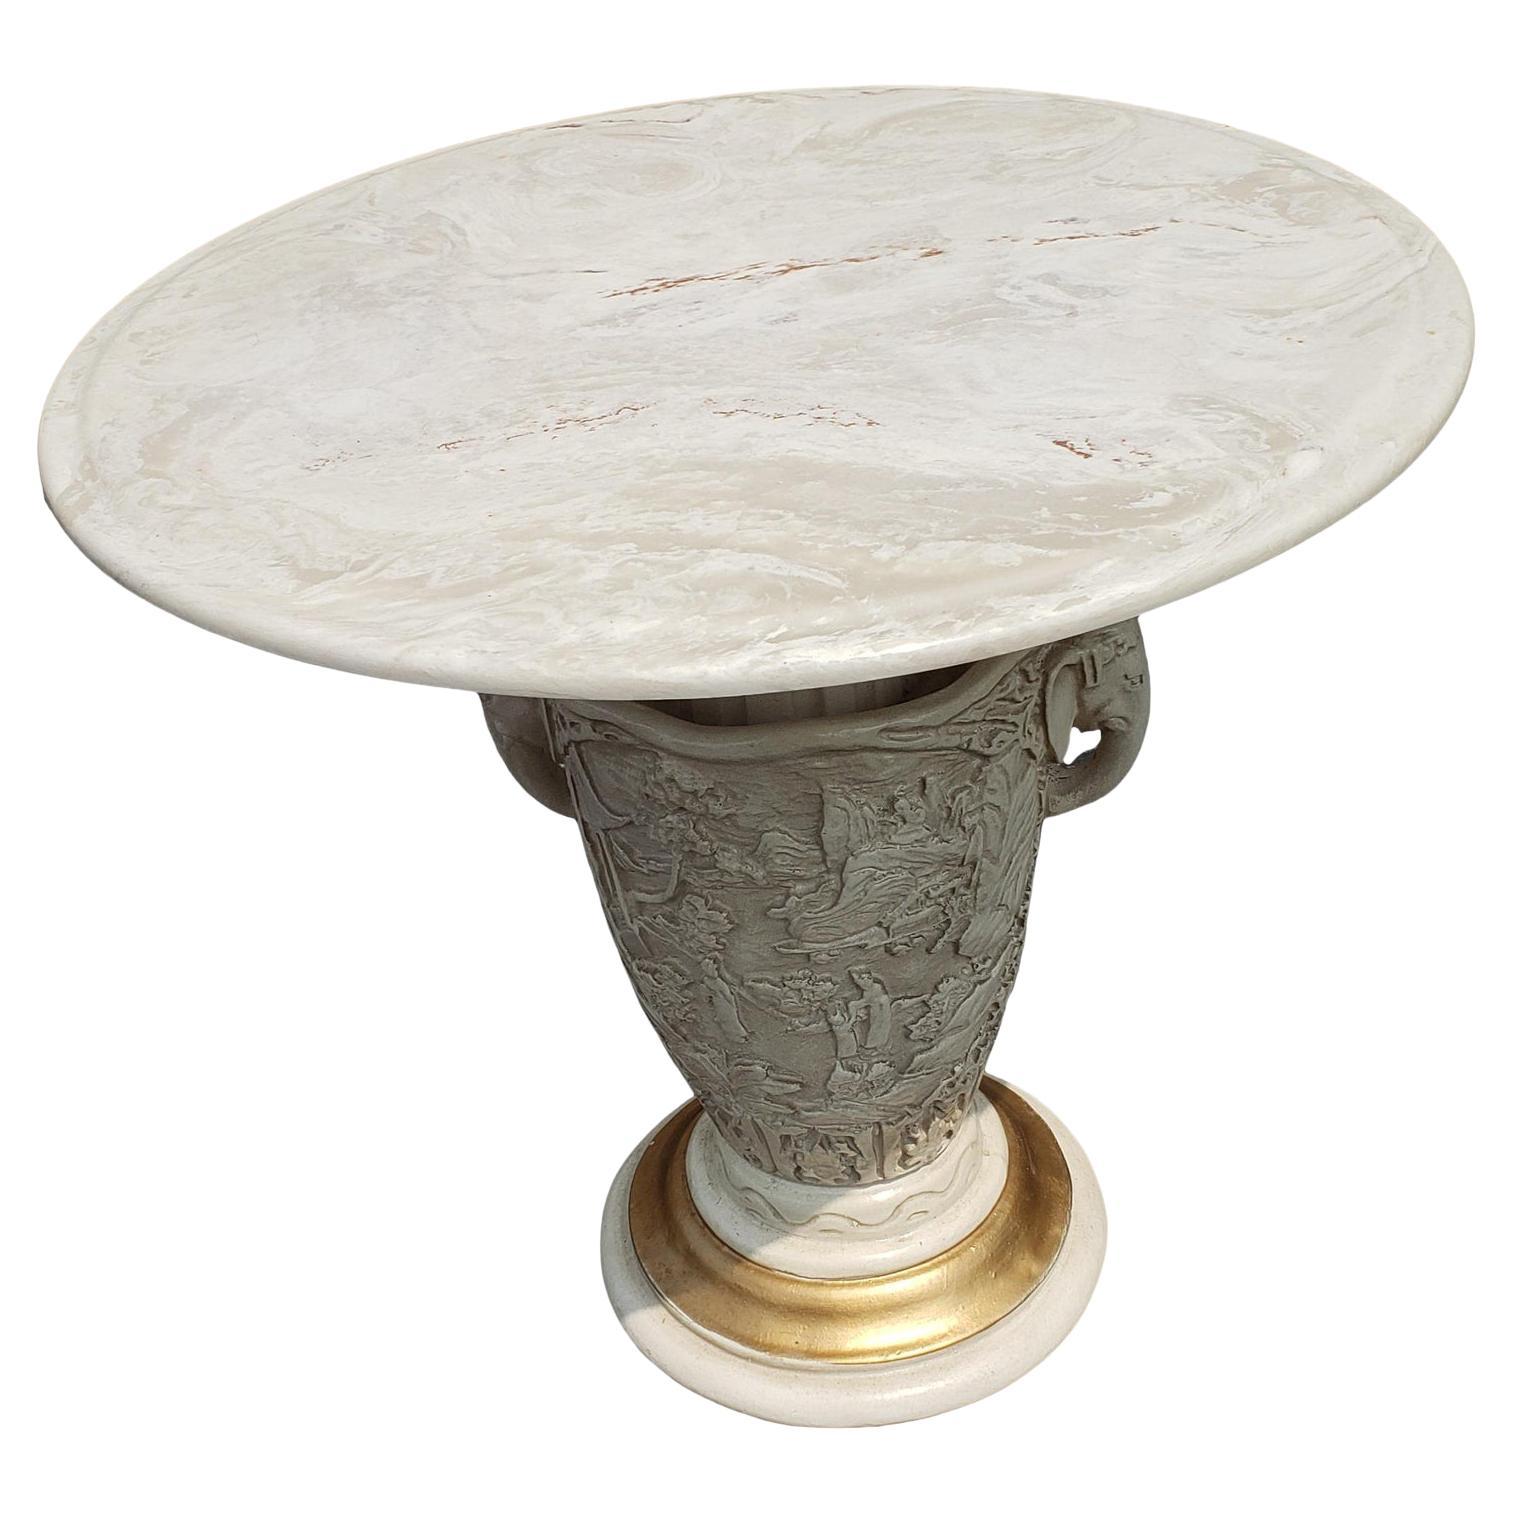 1960s Italian White Onyx Stone Top Pedestal Accent Table